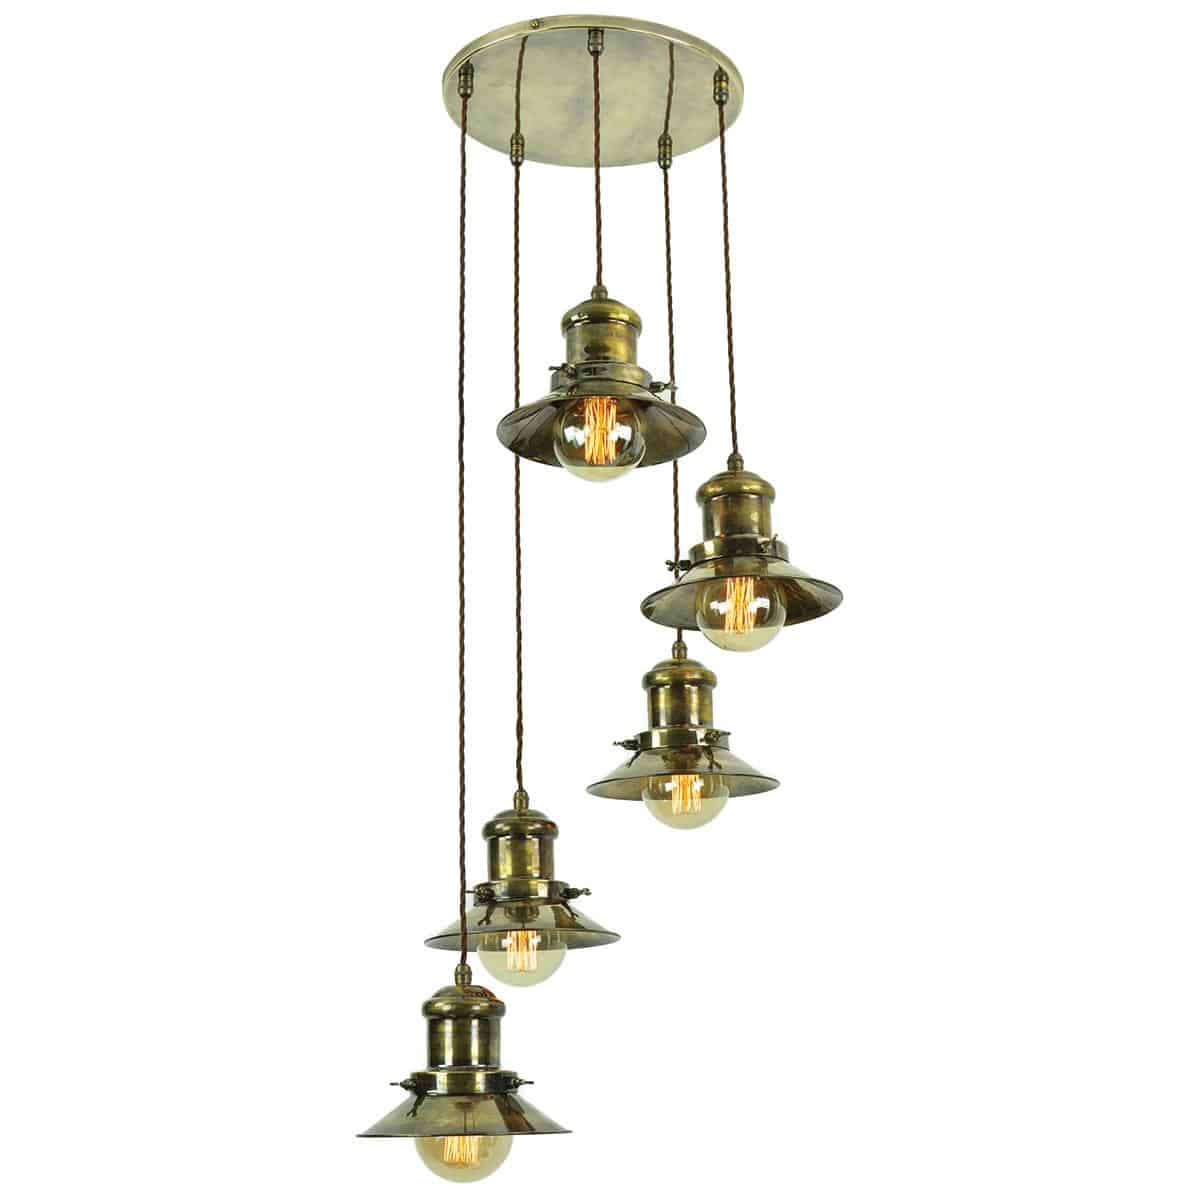 Small Edison Vintage 5 Light Ceiling Pendant Solid Antique Brass